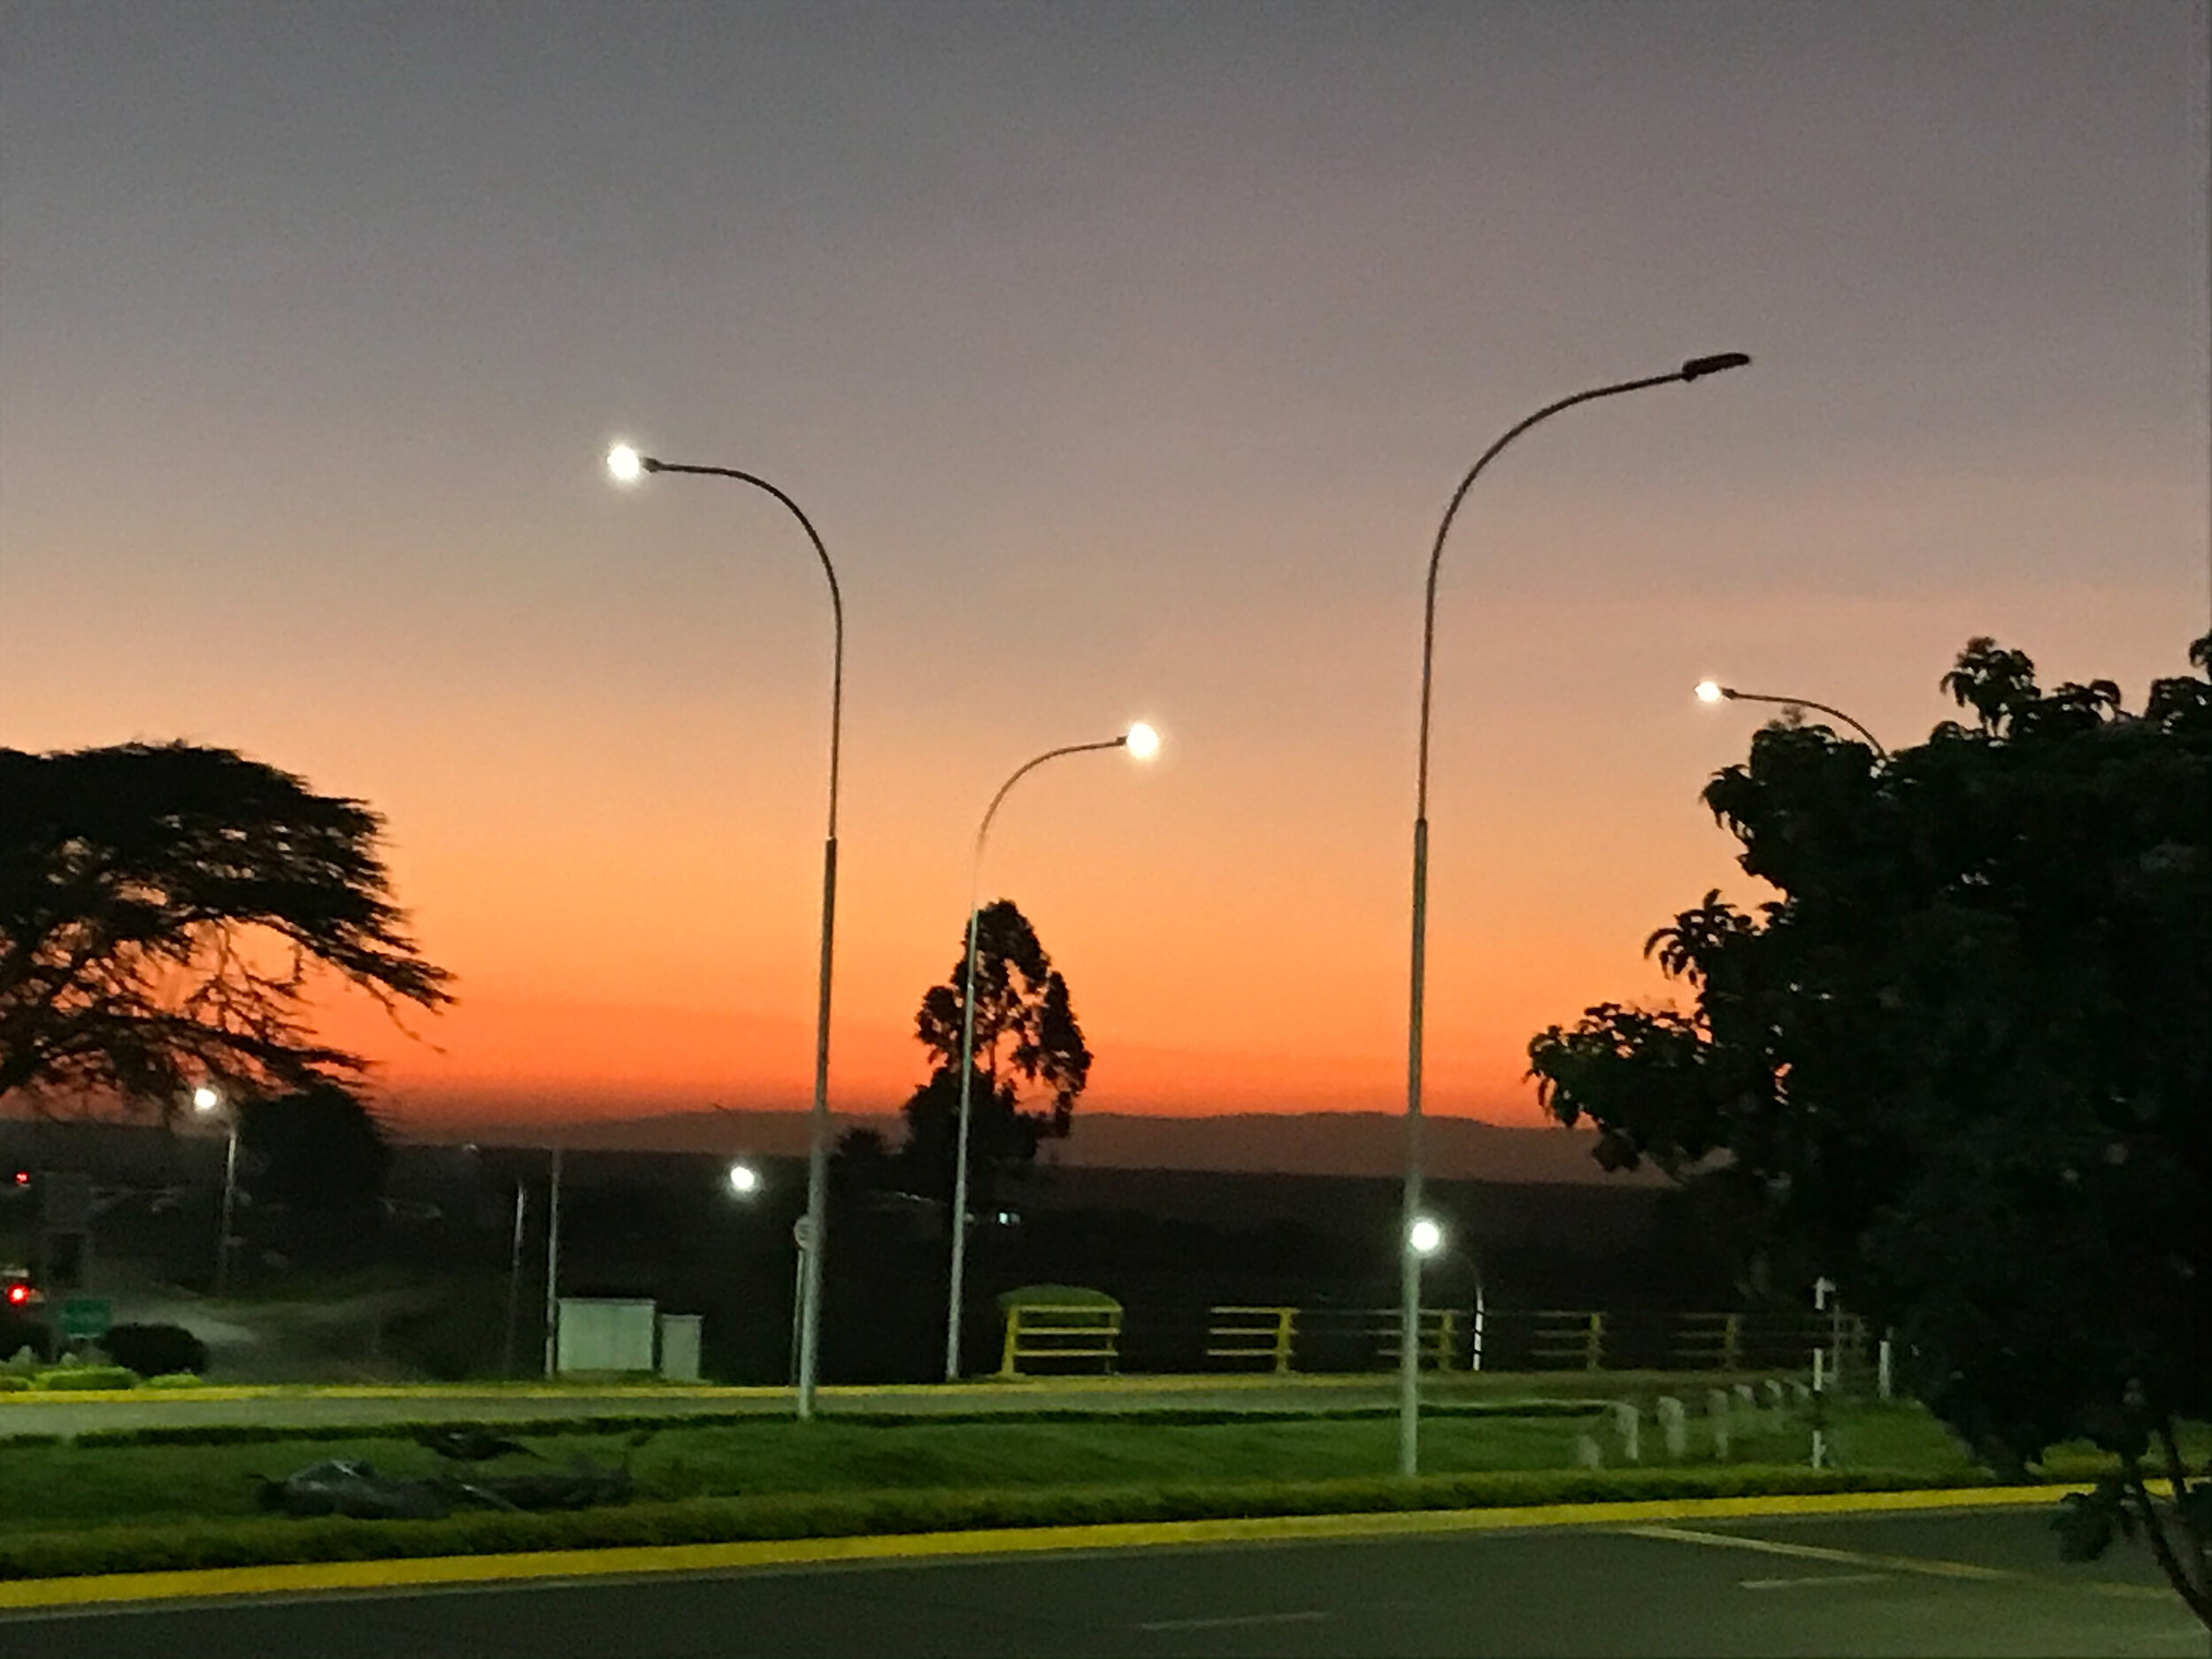 The 6 a.m. Nairobi sunrise